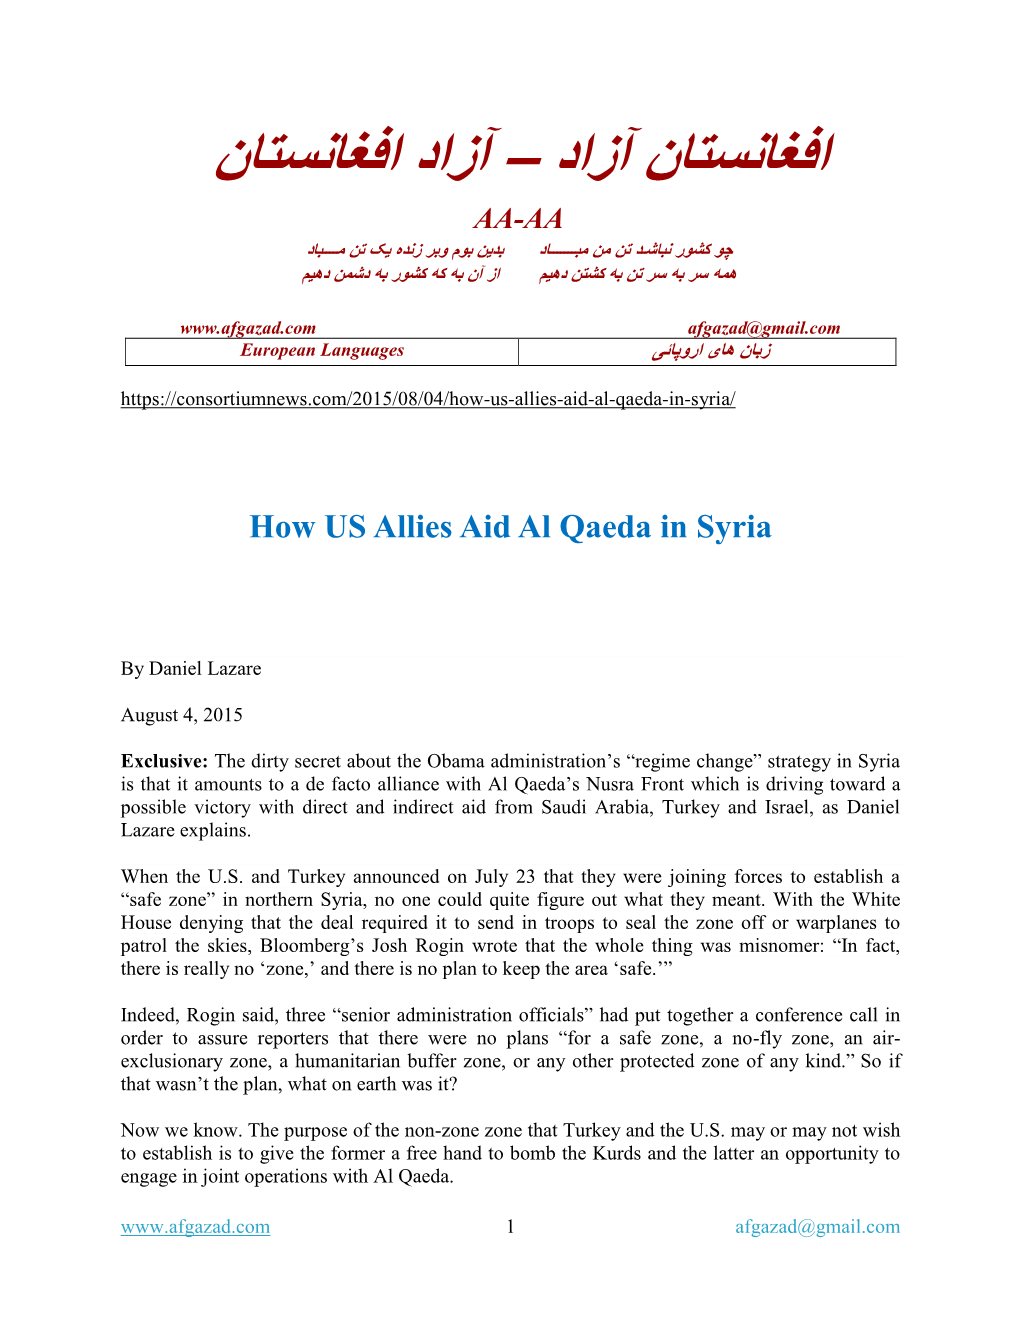 How US Allies Aid Al Qaeda in Syria